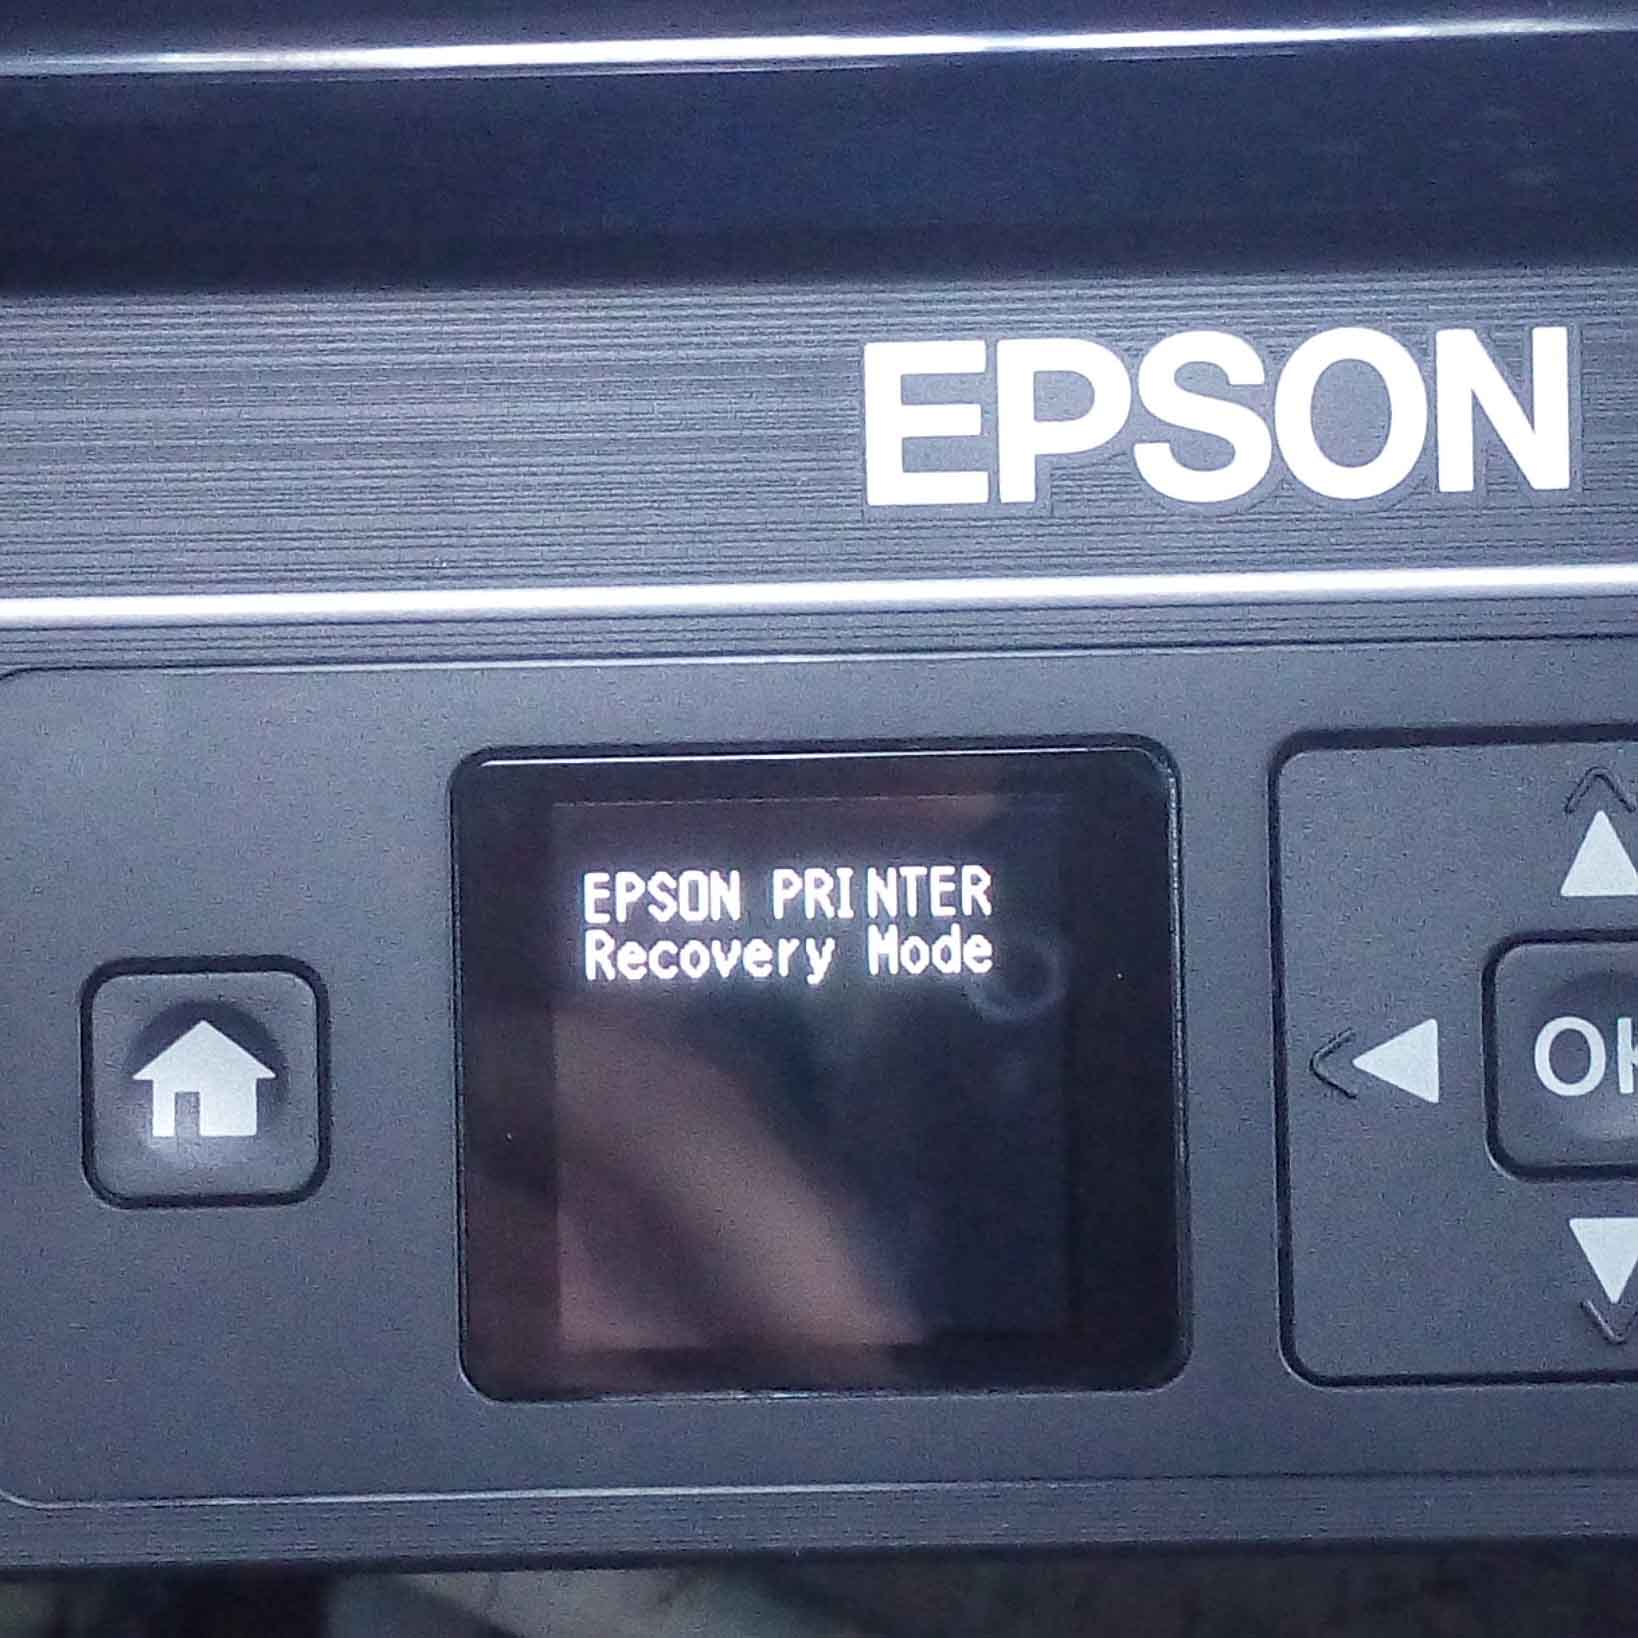 Epson XP-342 EPSON PRINTER Recovery mode